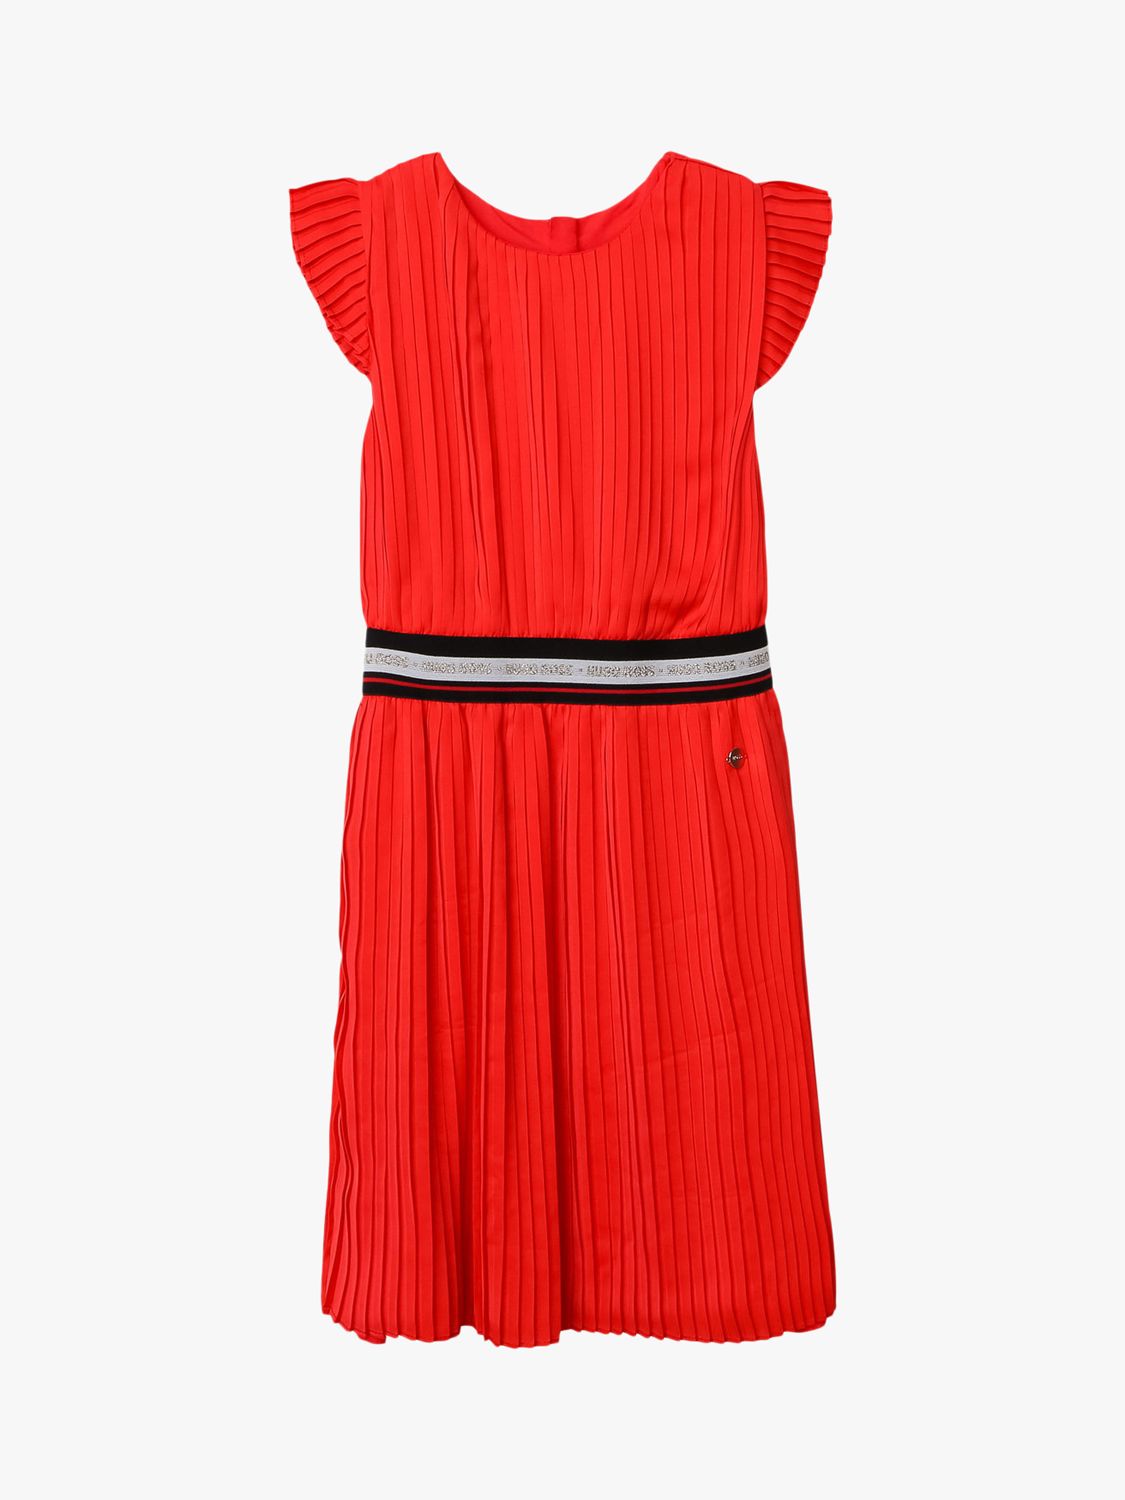 HUGO BOSS Girls' Pleated Satin Dress, Bright Red at John Lewis & Partners